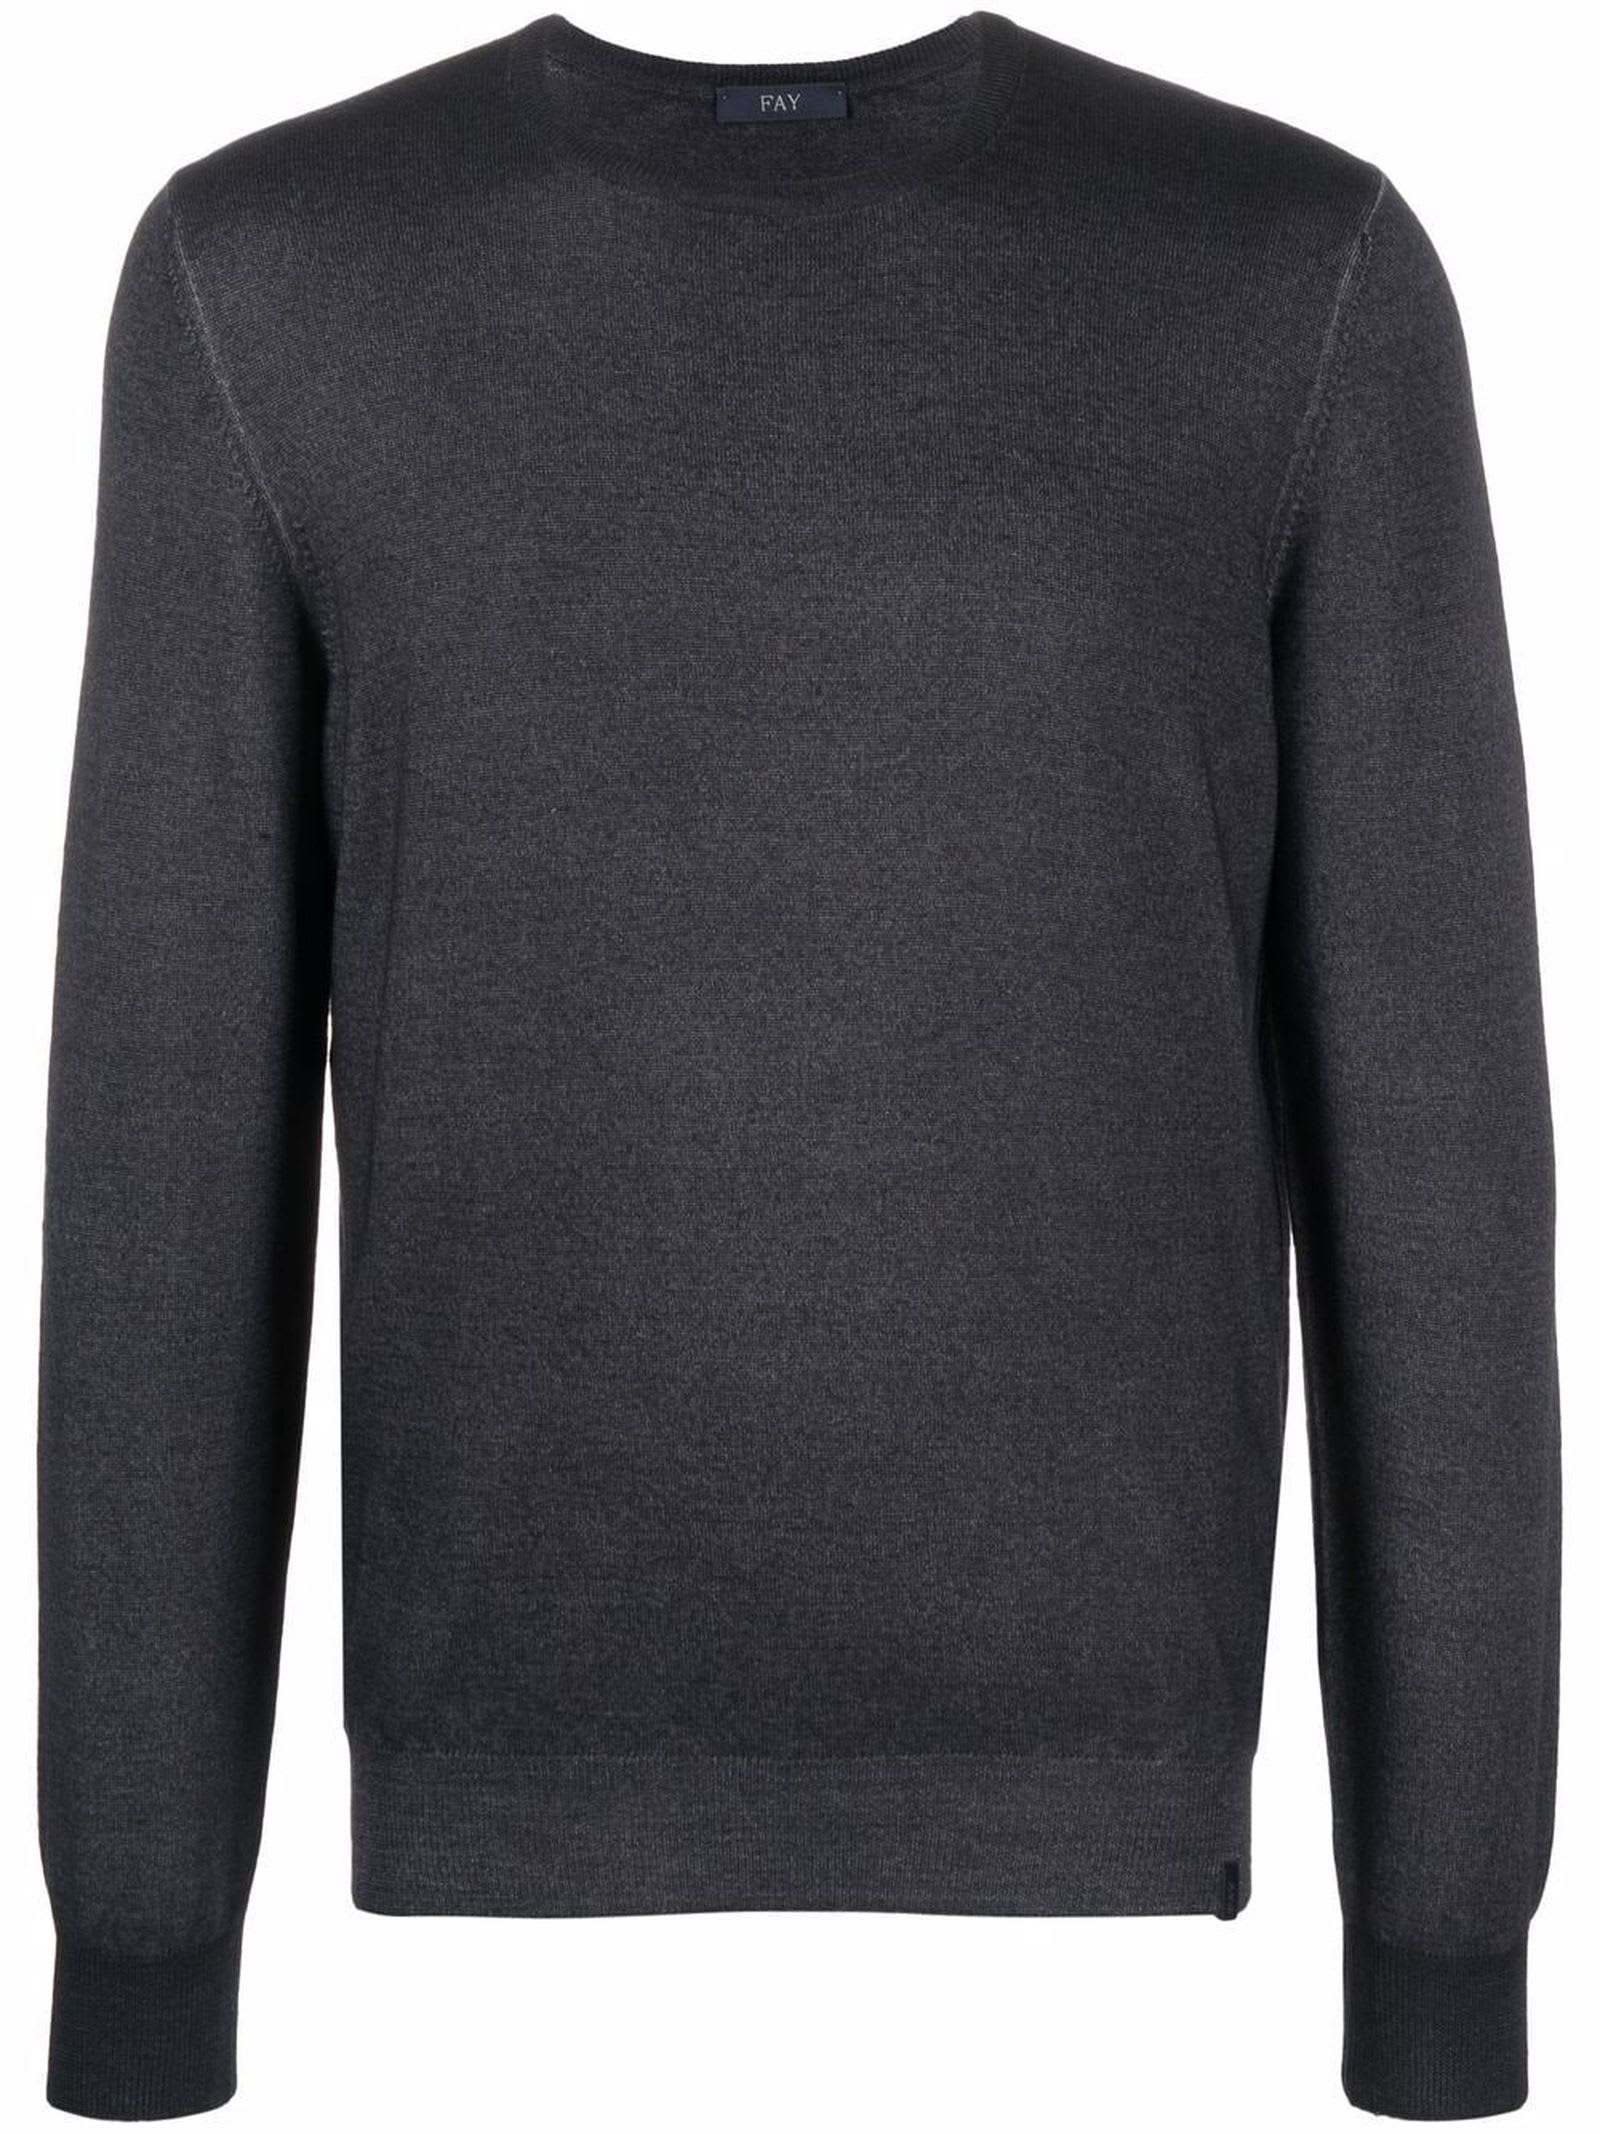 Fay Dark Grey Virgin Wool Sweater